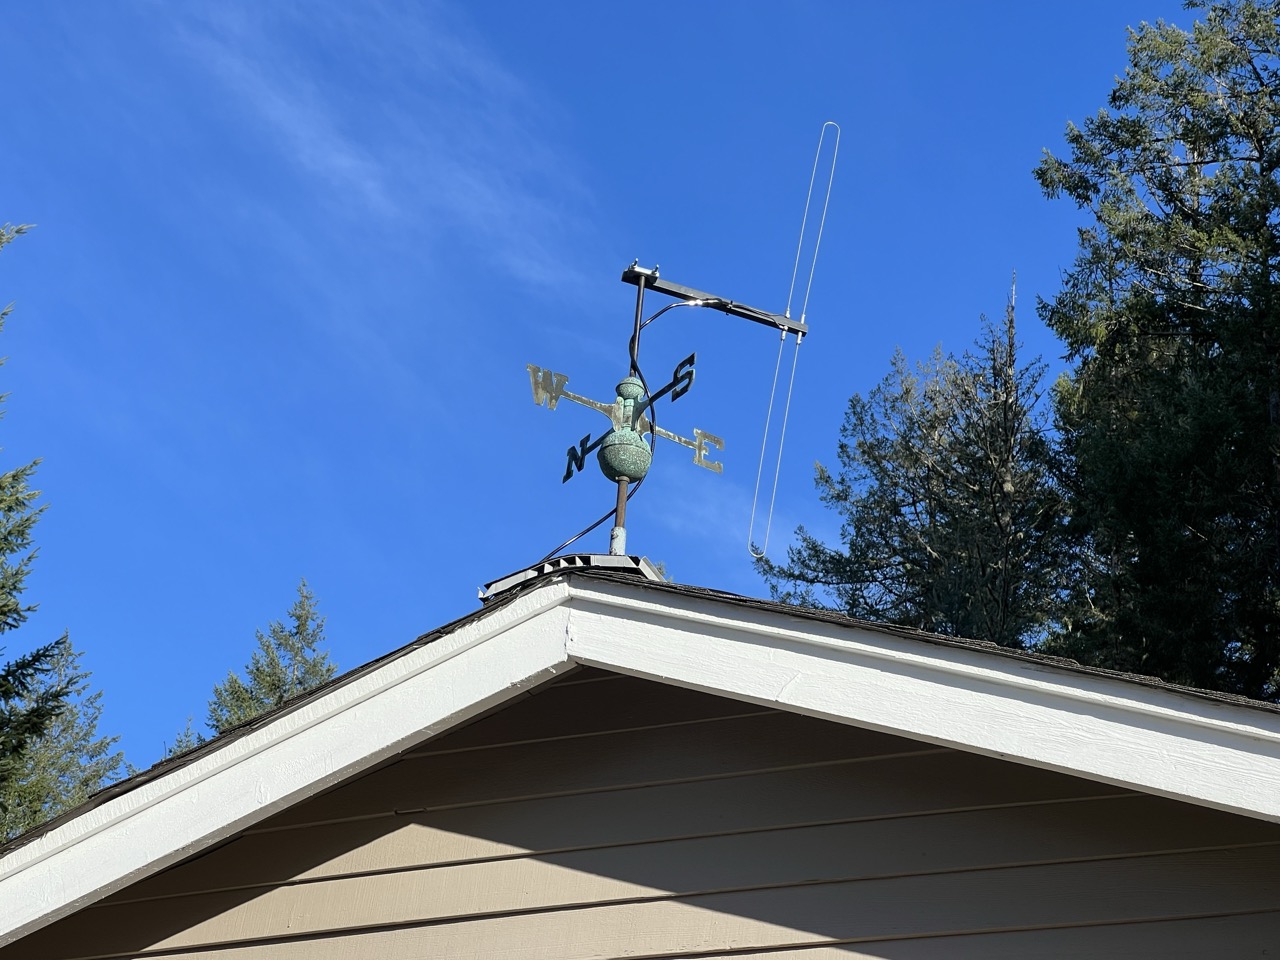 The weather vane antenna mount